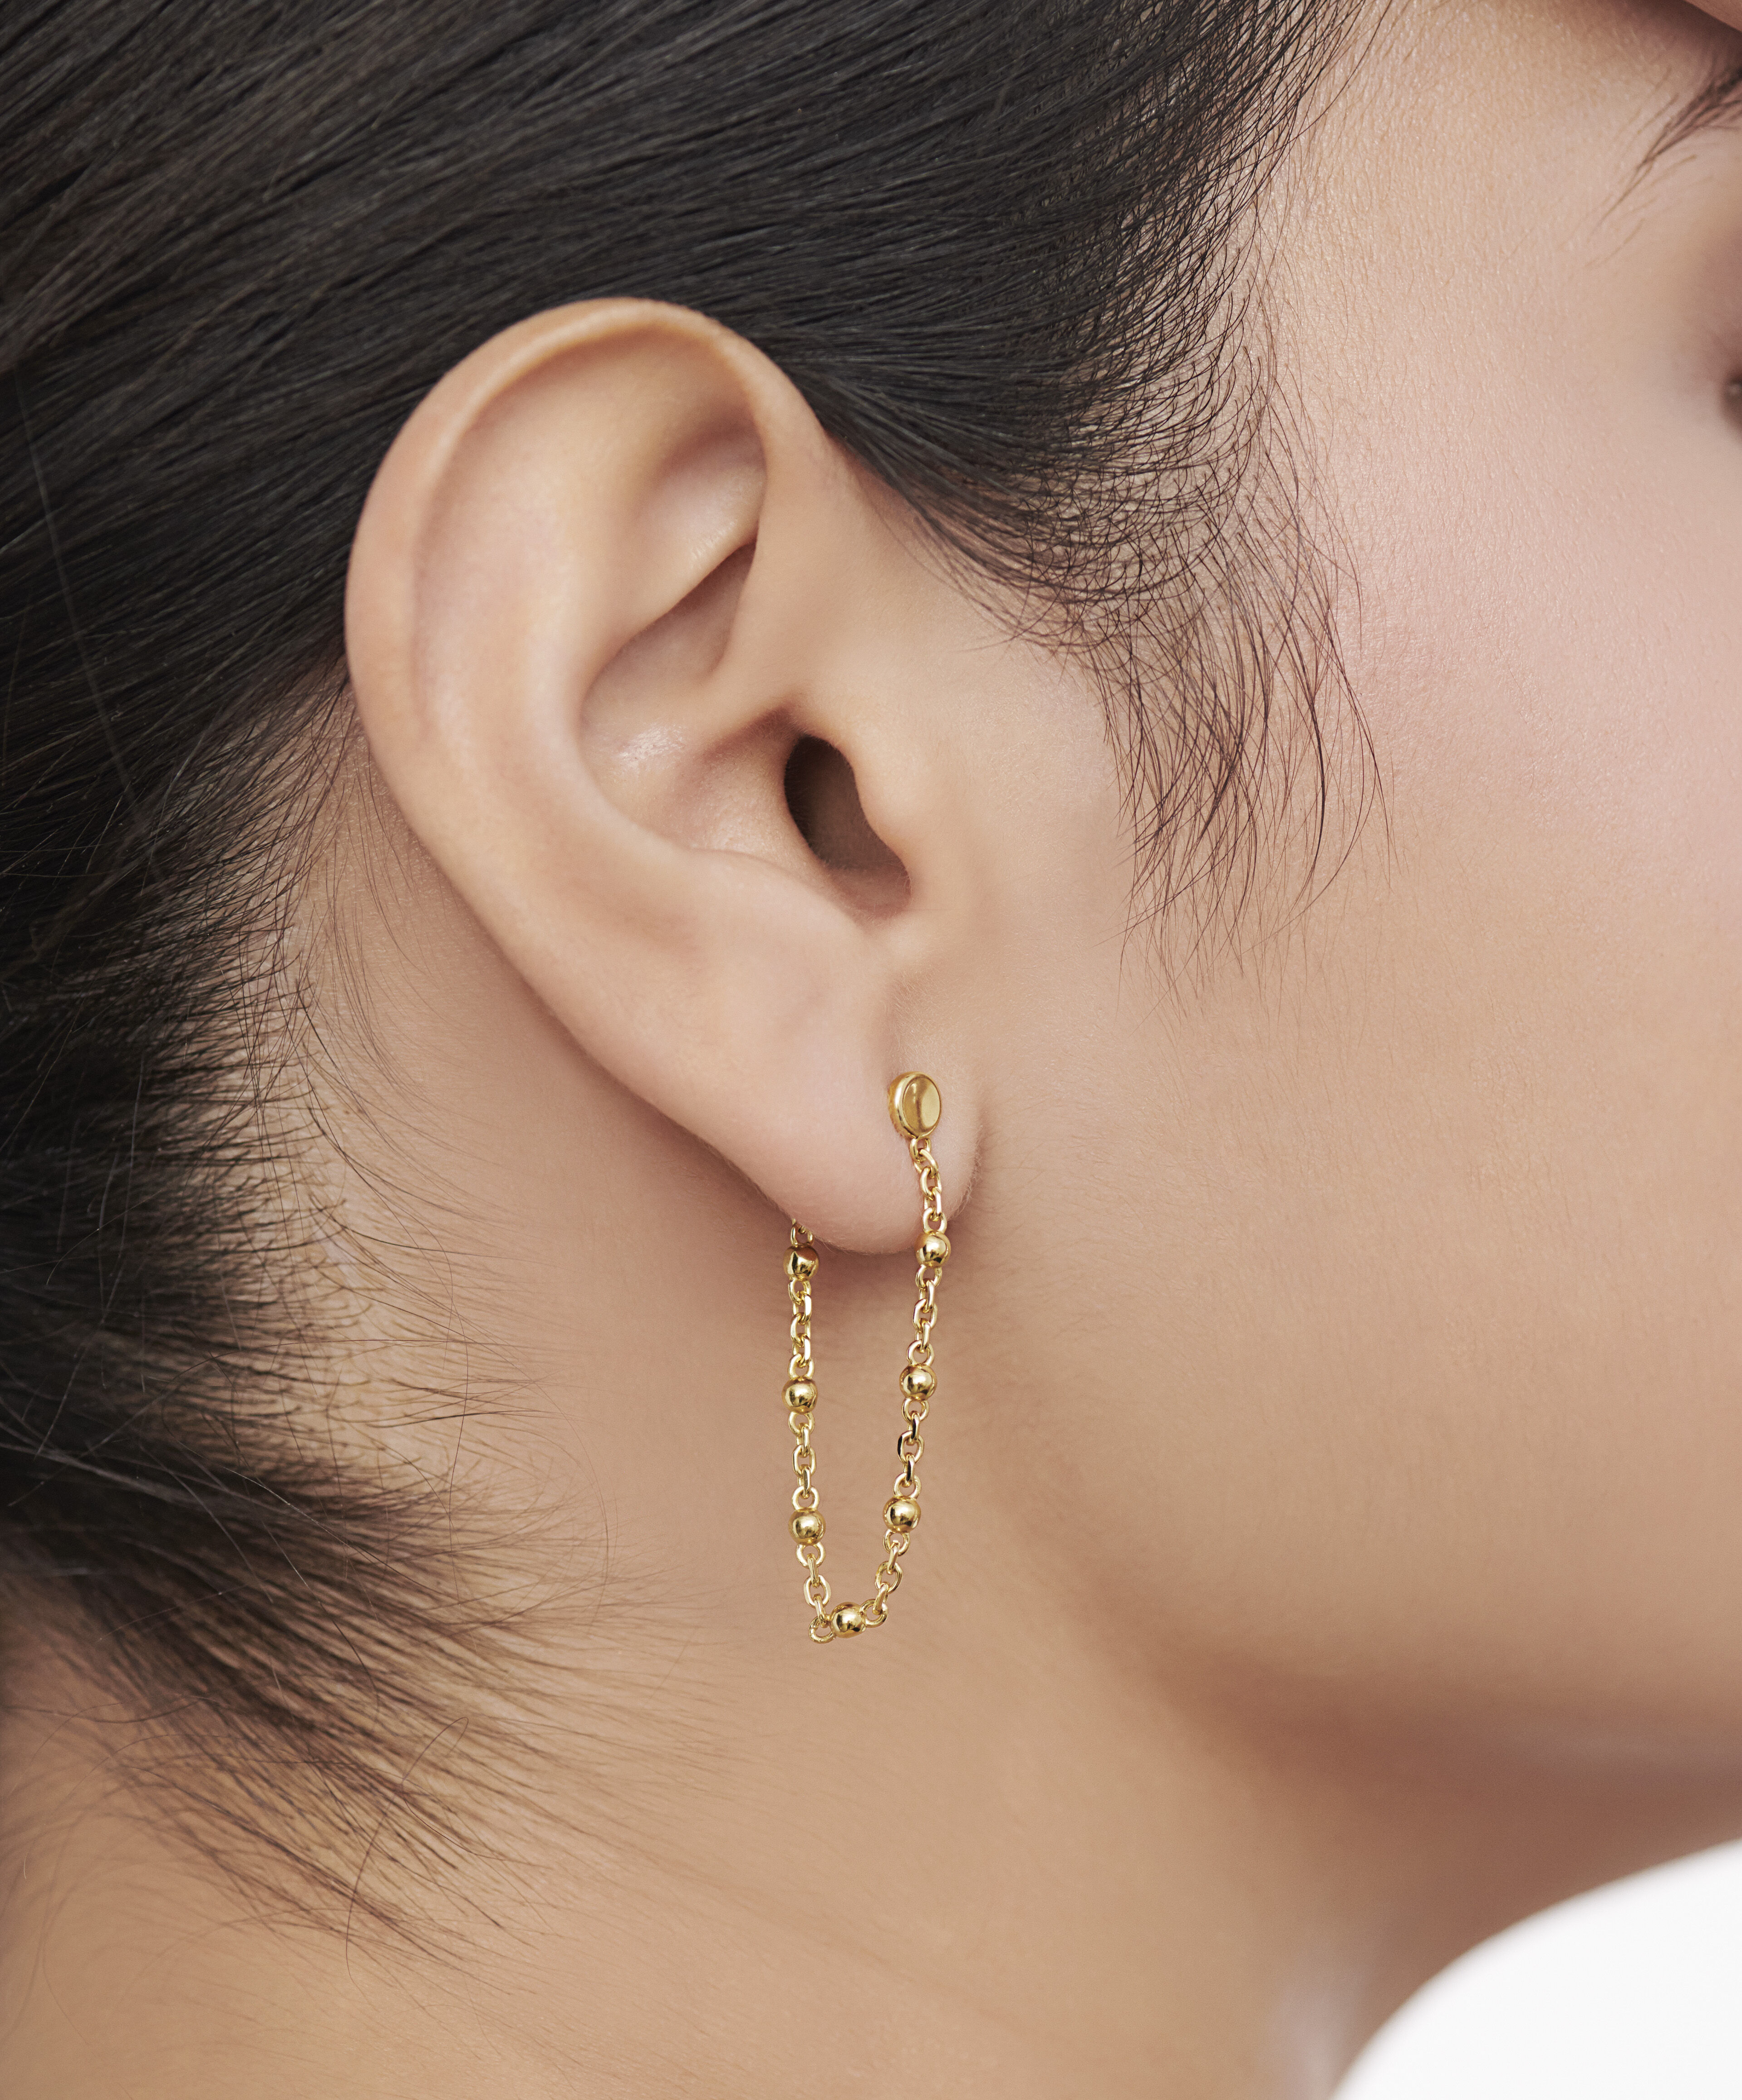 Unique Gold Tone Chain Earrings